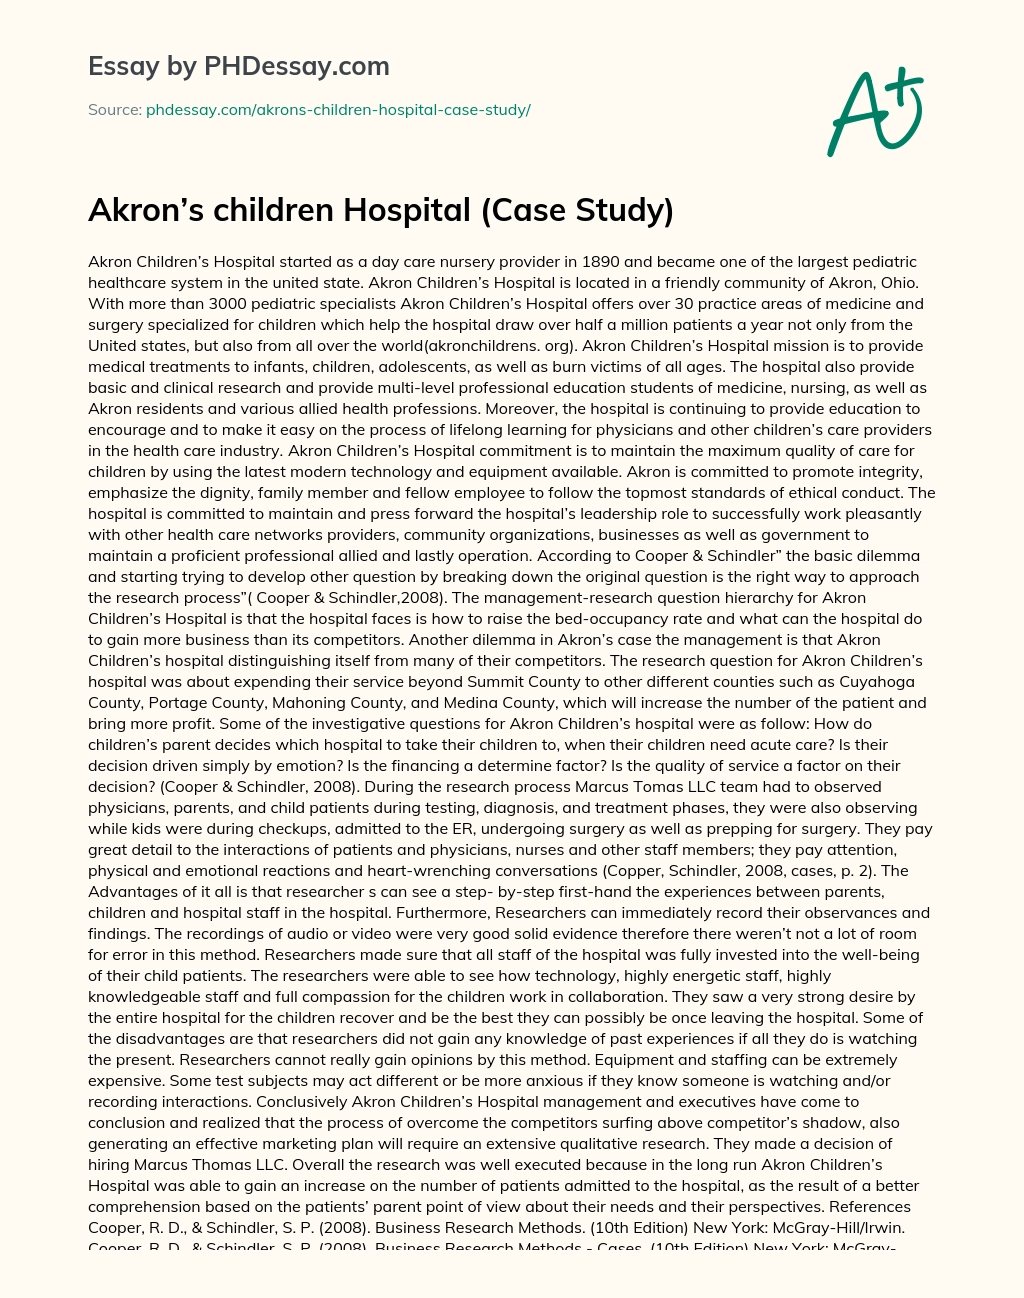 Akron’s children Hospital (Case Study) essay